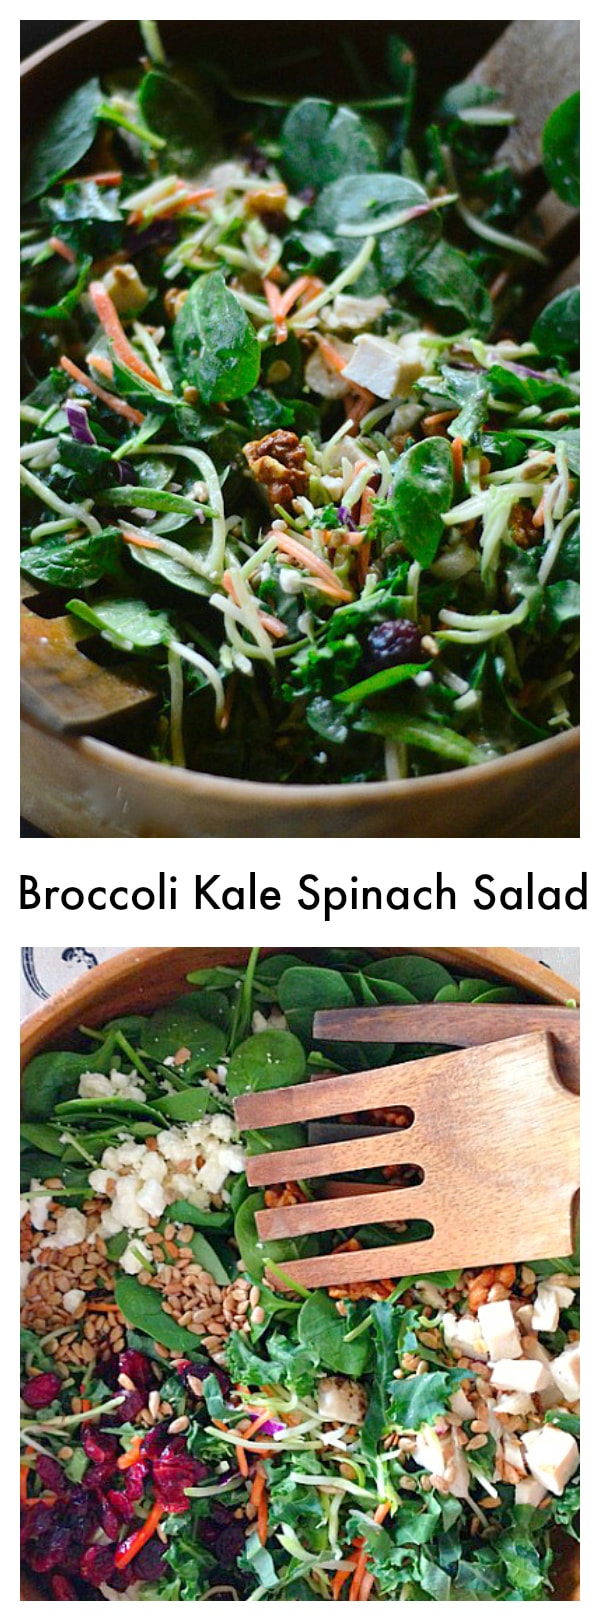 Broccoli Kale Spinach Salad